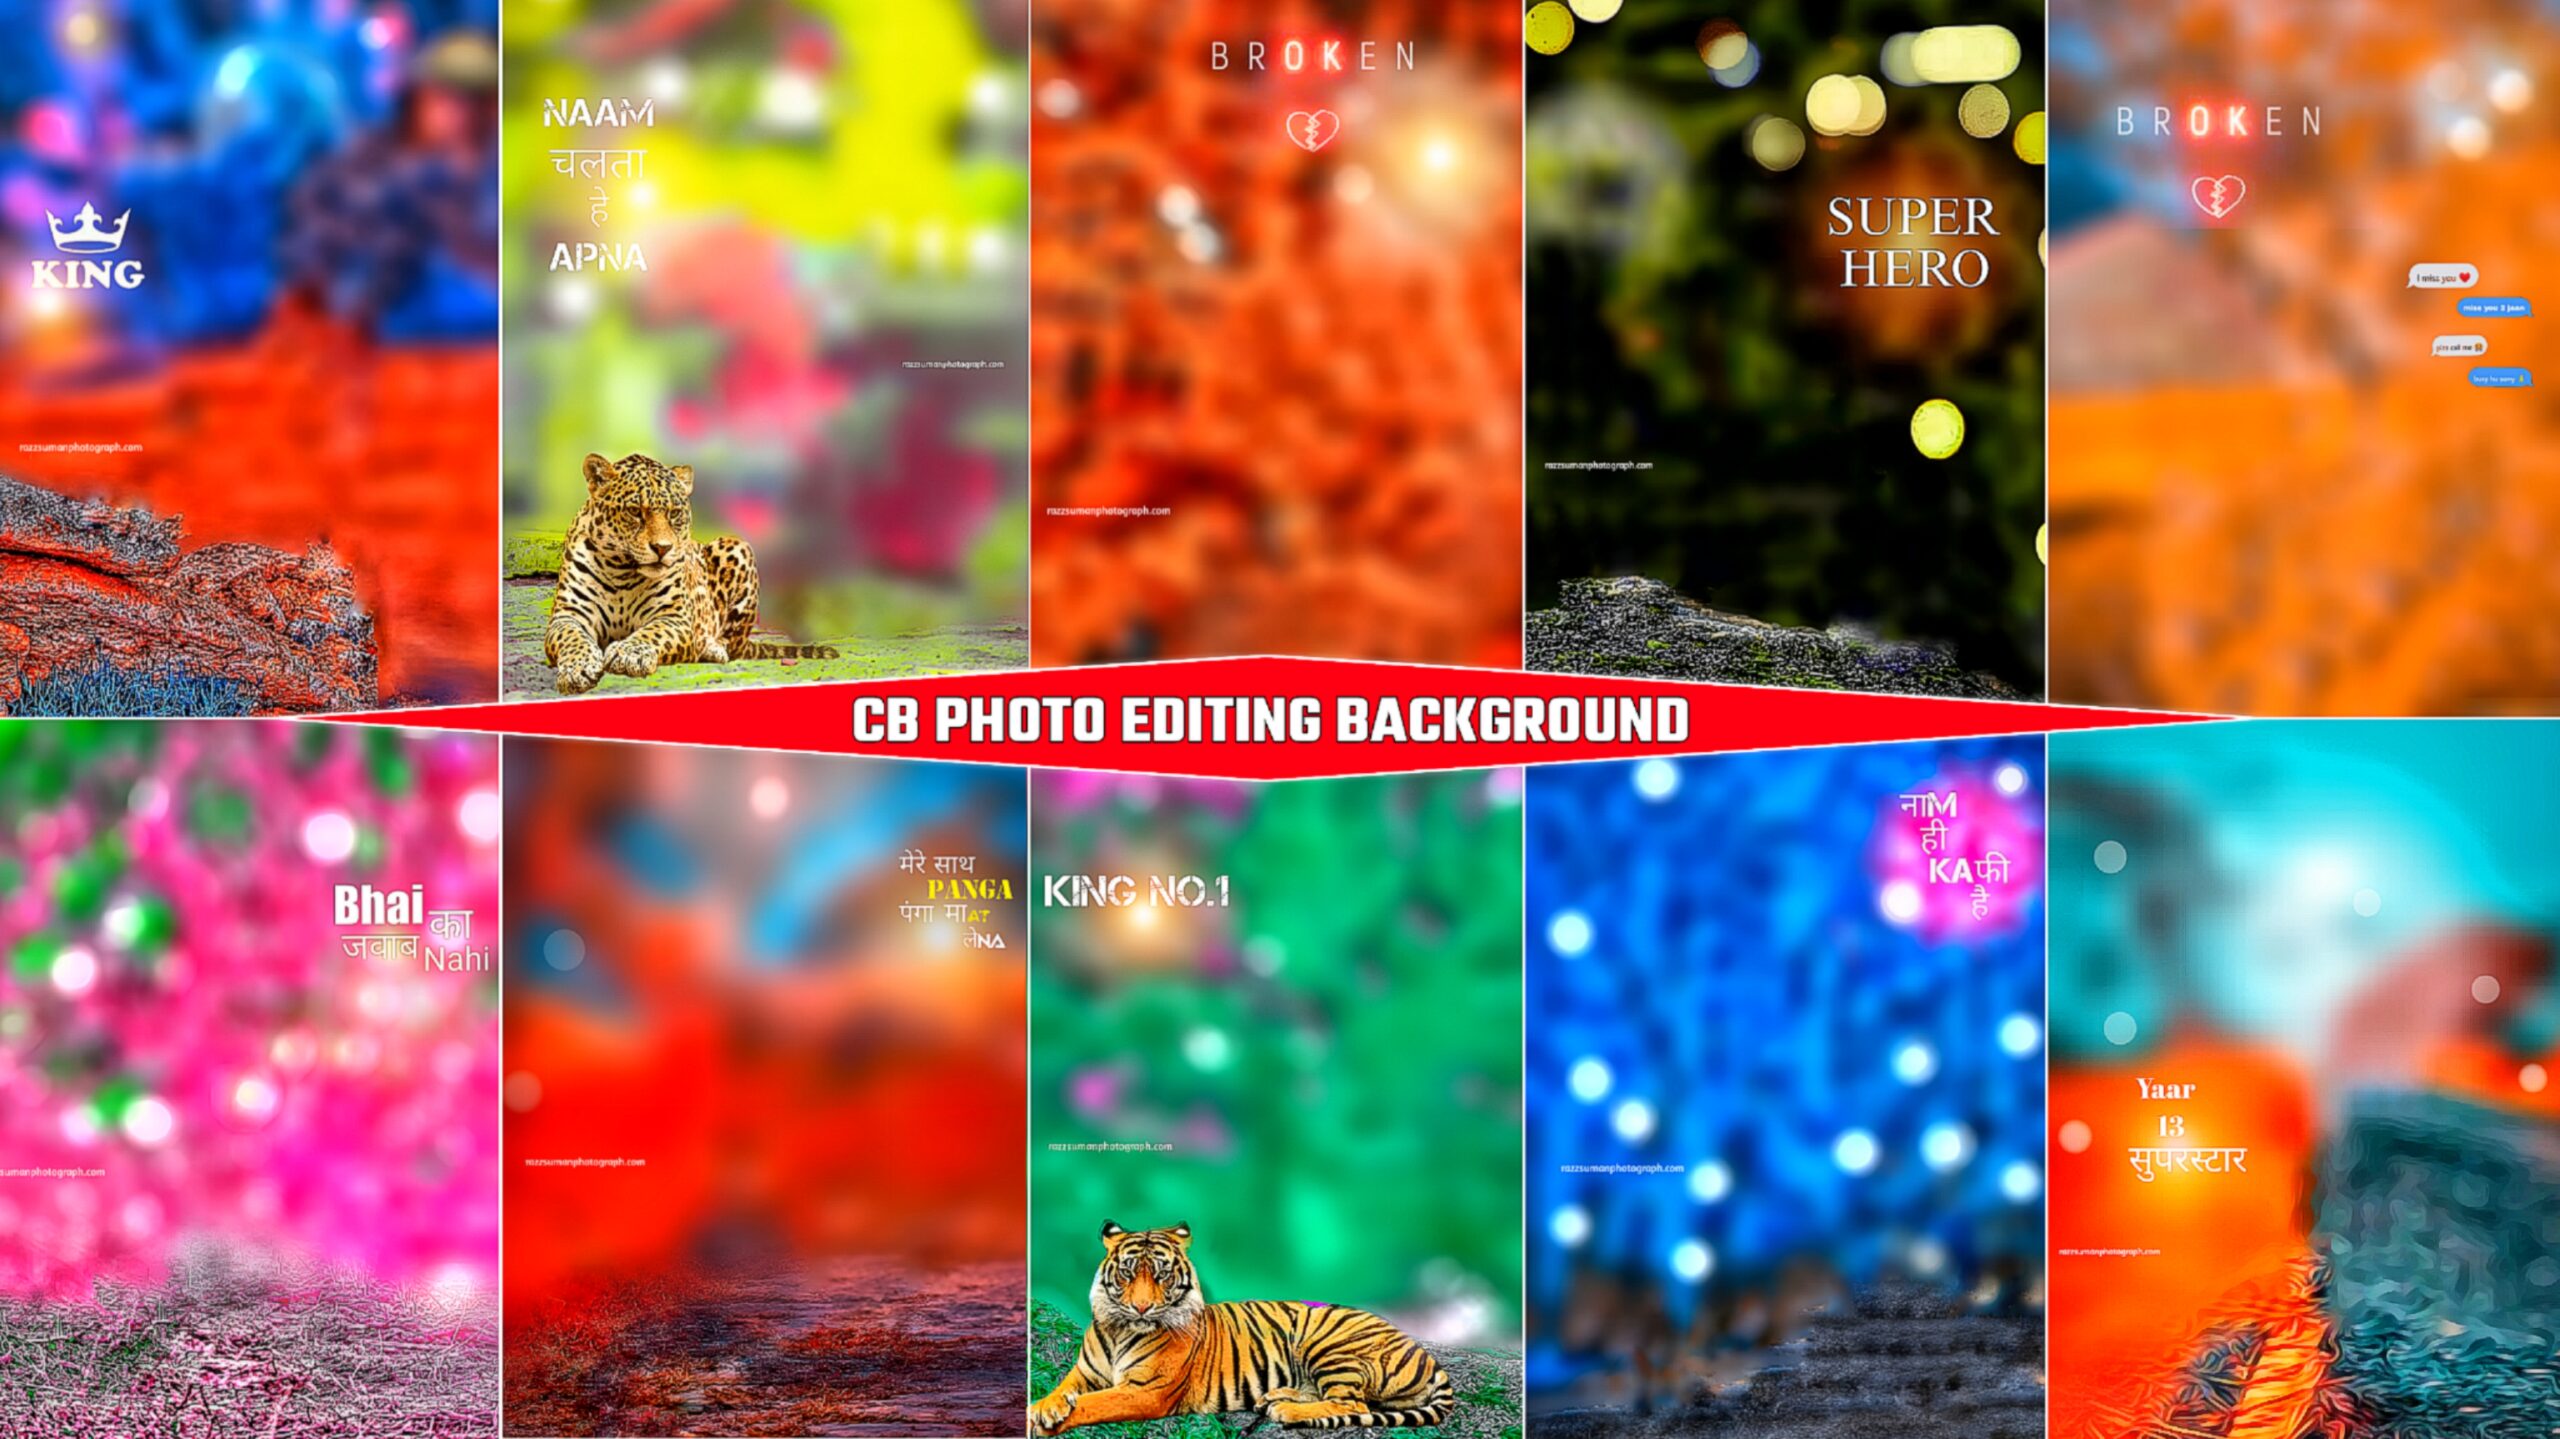 Cb editing background full hd 1080p download | Razz suman photography